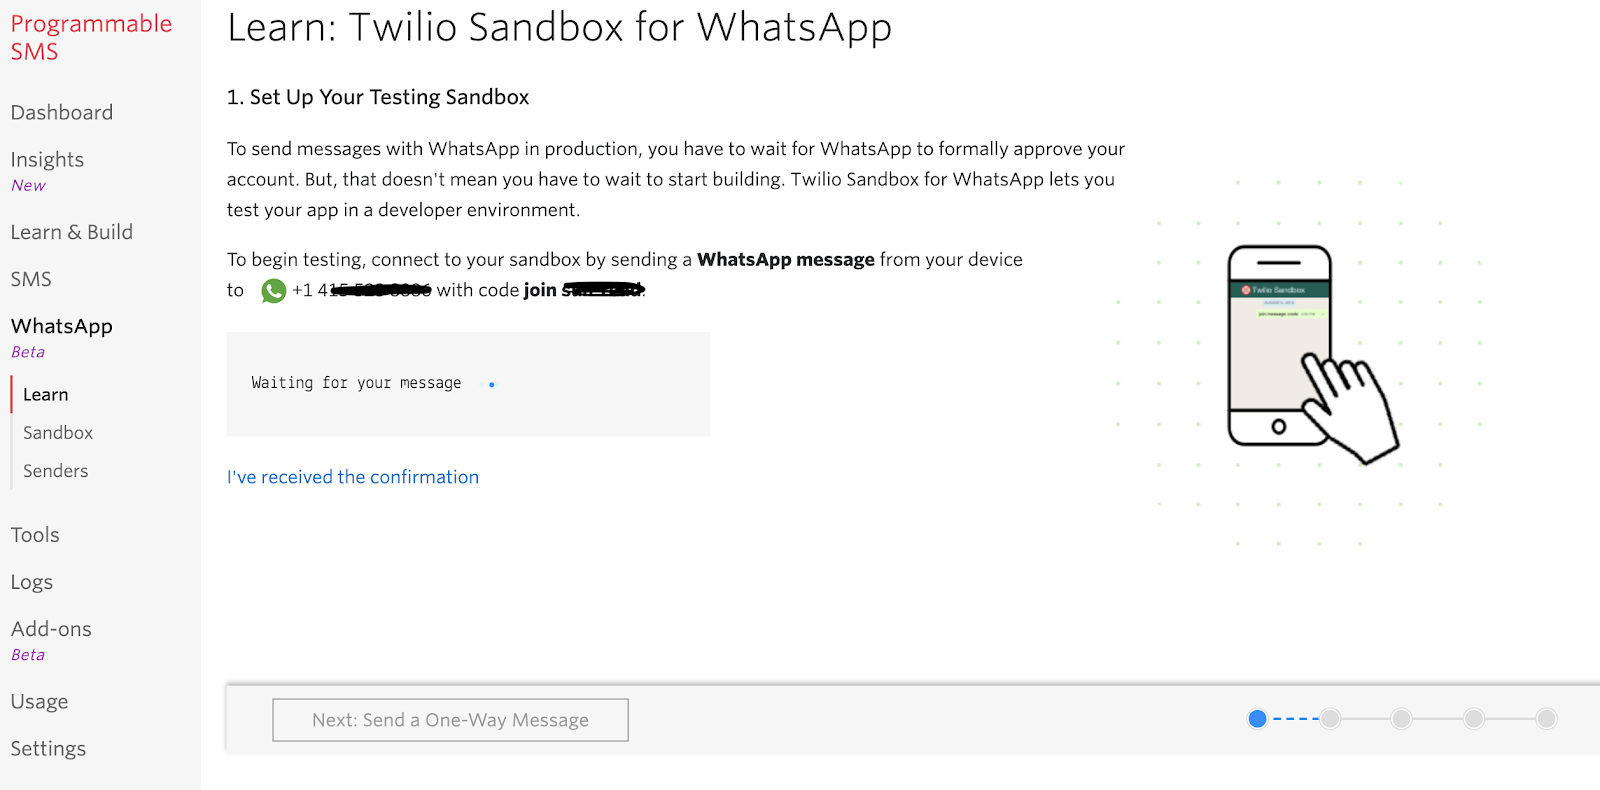 Twilio Sandbox for WhatsApp